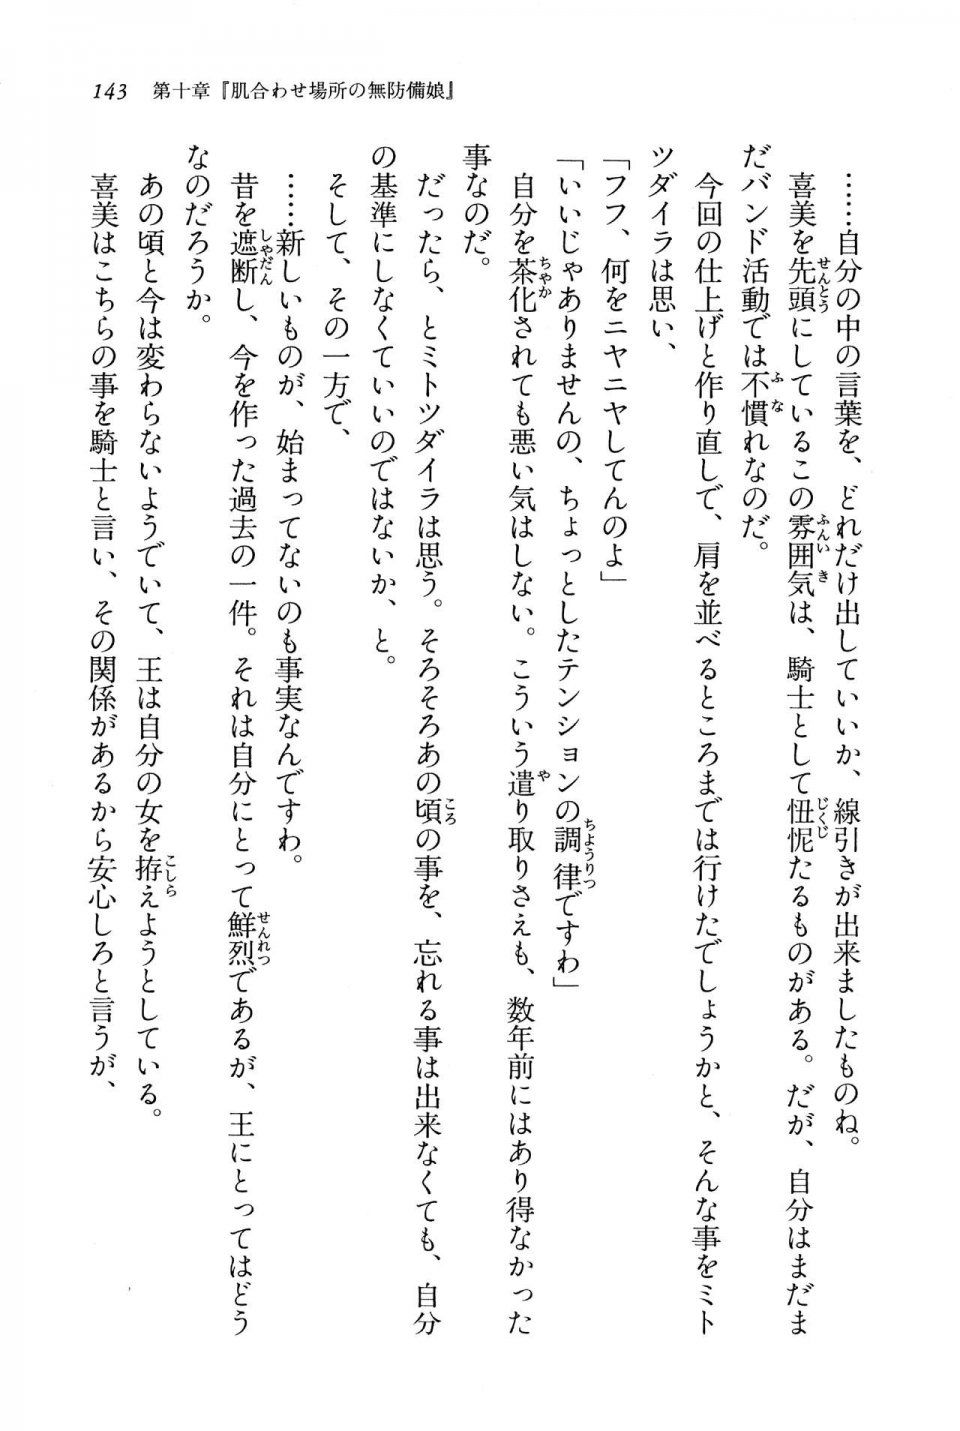 Kyoukai Senjou no Horizon BD Special Mininovel Vol 8(4B) - Photo #147